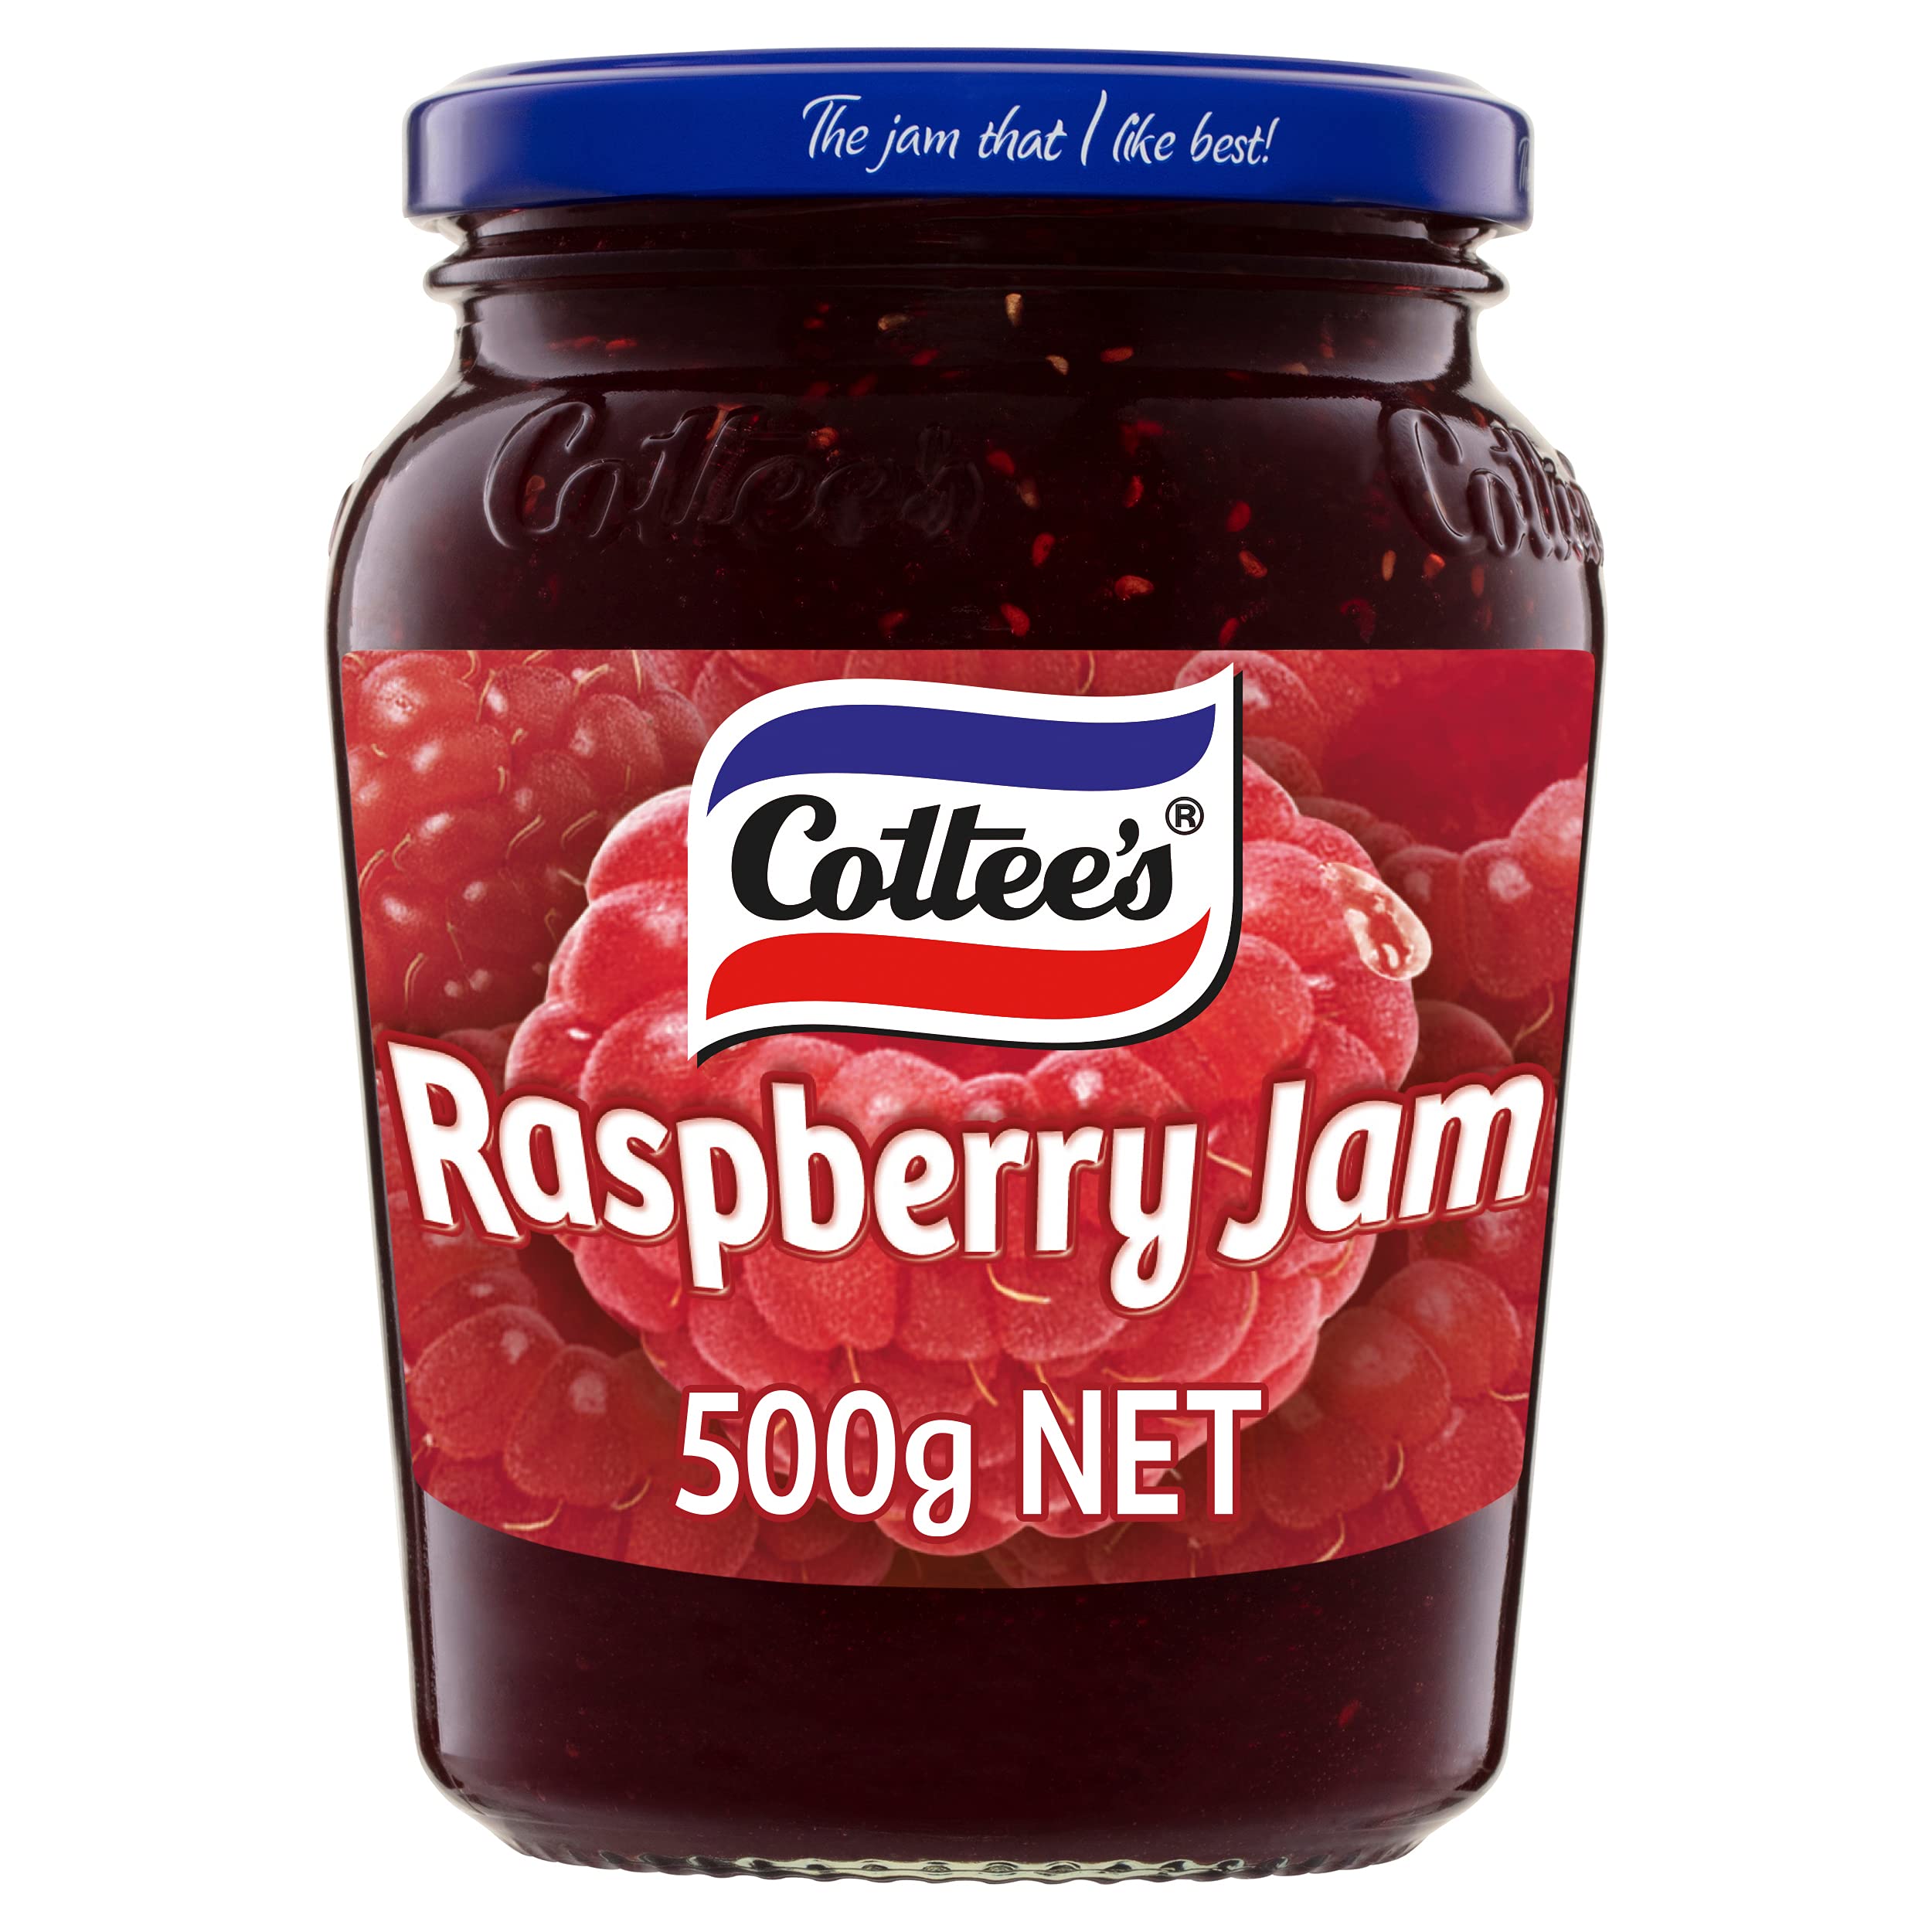 Cottee's Raspberry Jam 500g